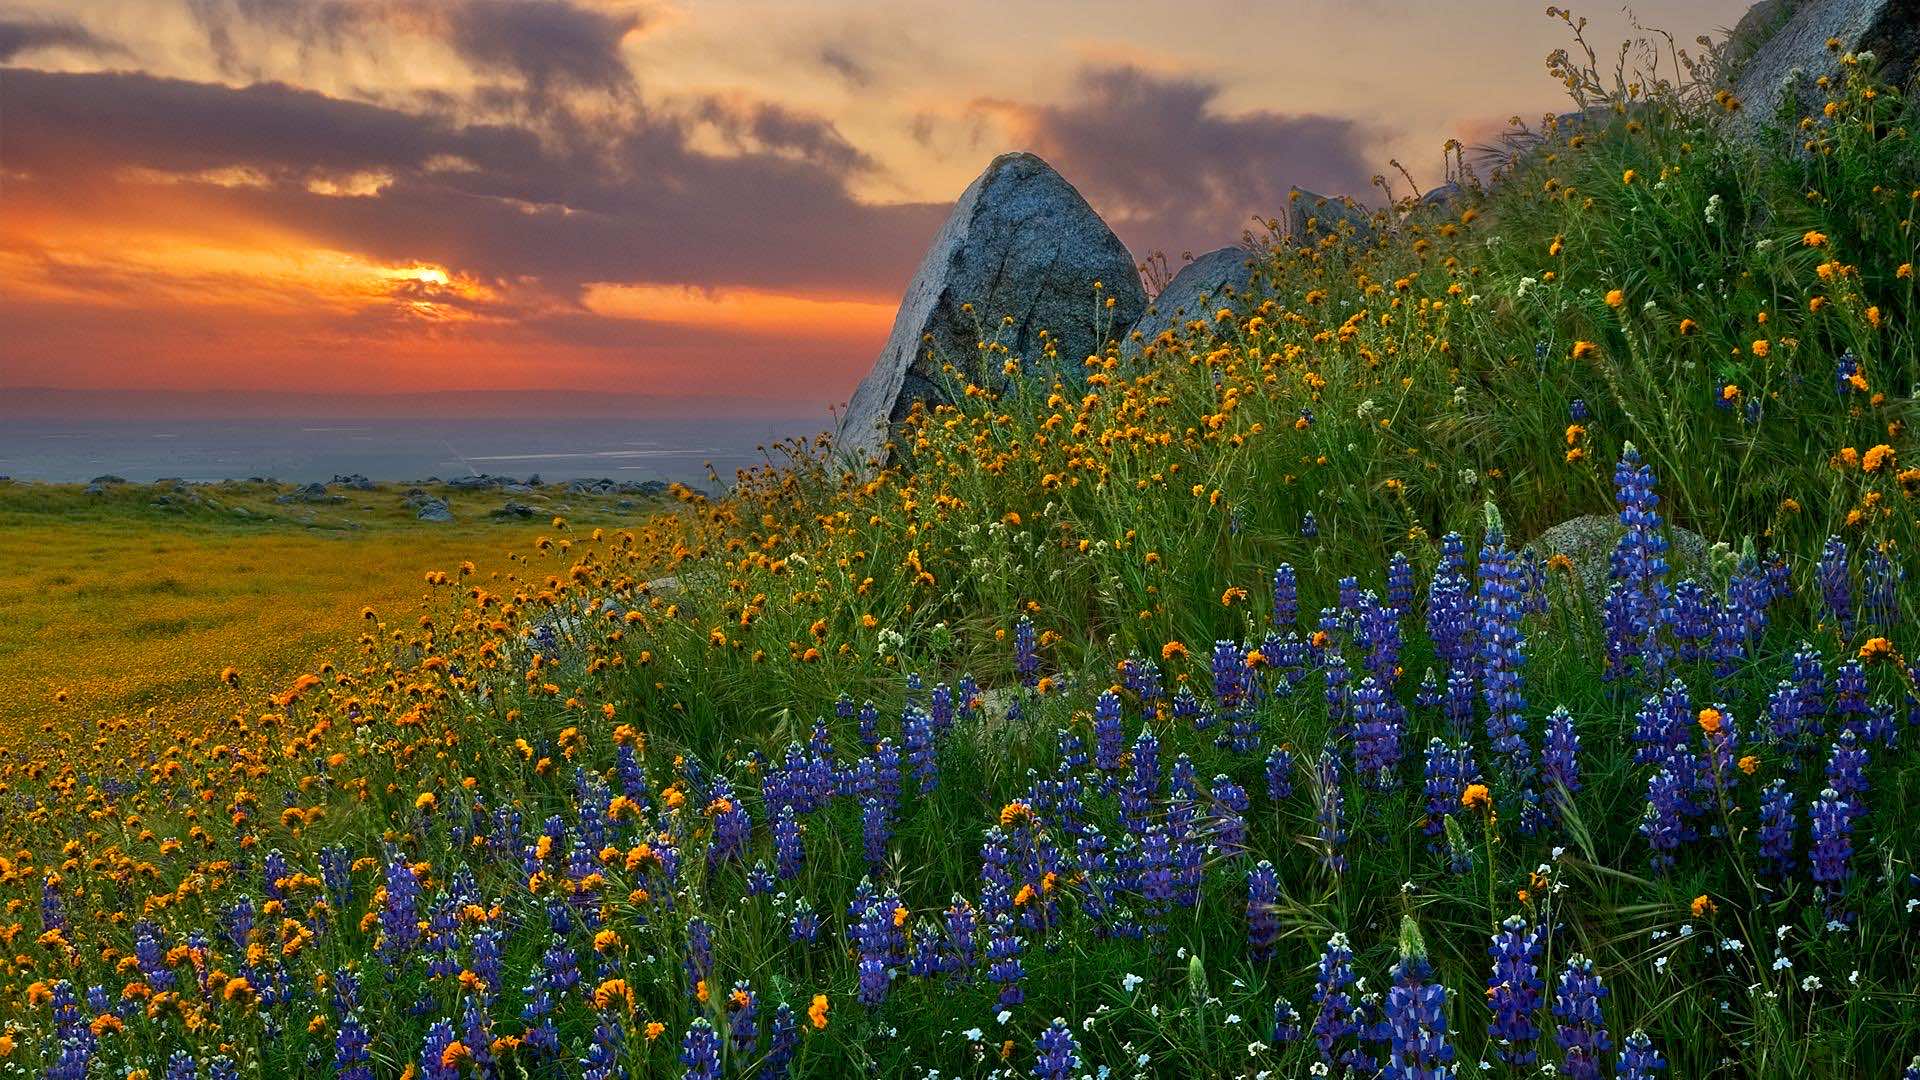 50 Stunning HD Landscape Photographs That Show the True Beau